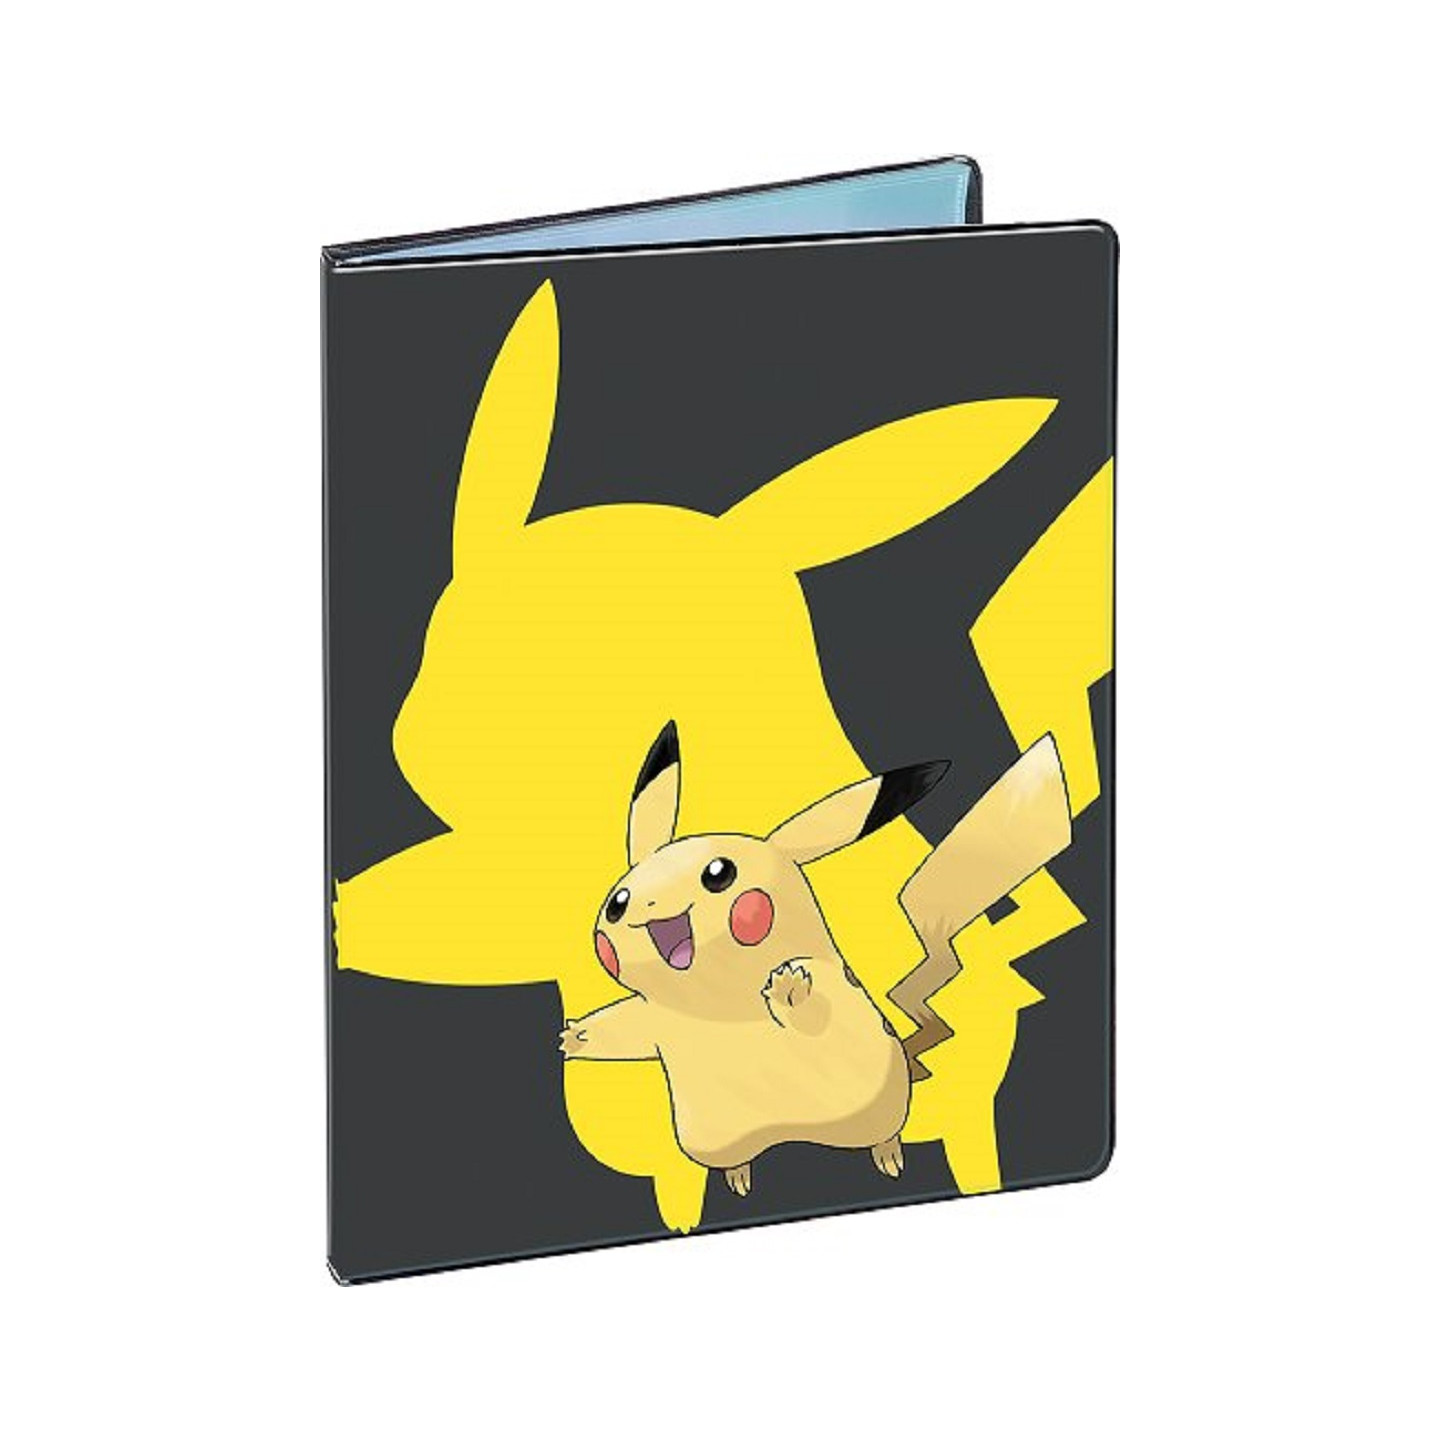 2 Feuilles A4 spéciales Carte Jumbo Pokemon Ultra.Pro Album Pokemon Classeur Portfolio A4 Pikachu 2 Feuilles A4 spéciales Jeton Pokemon 